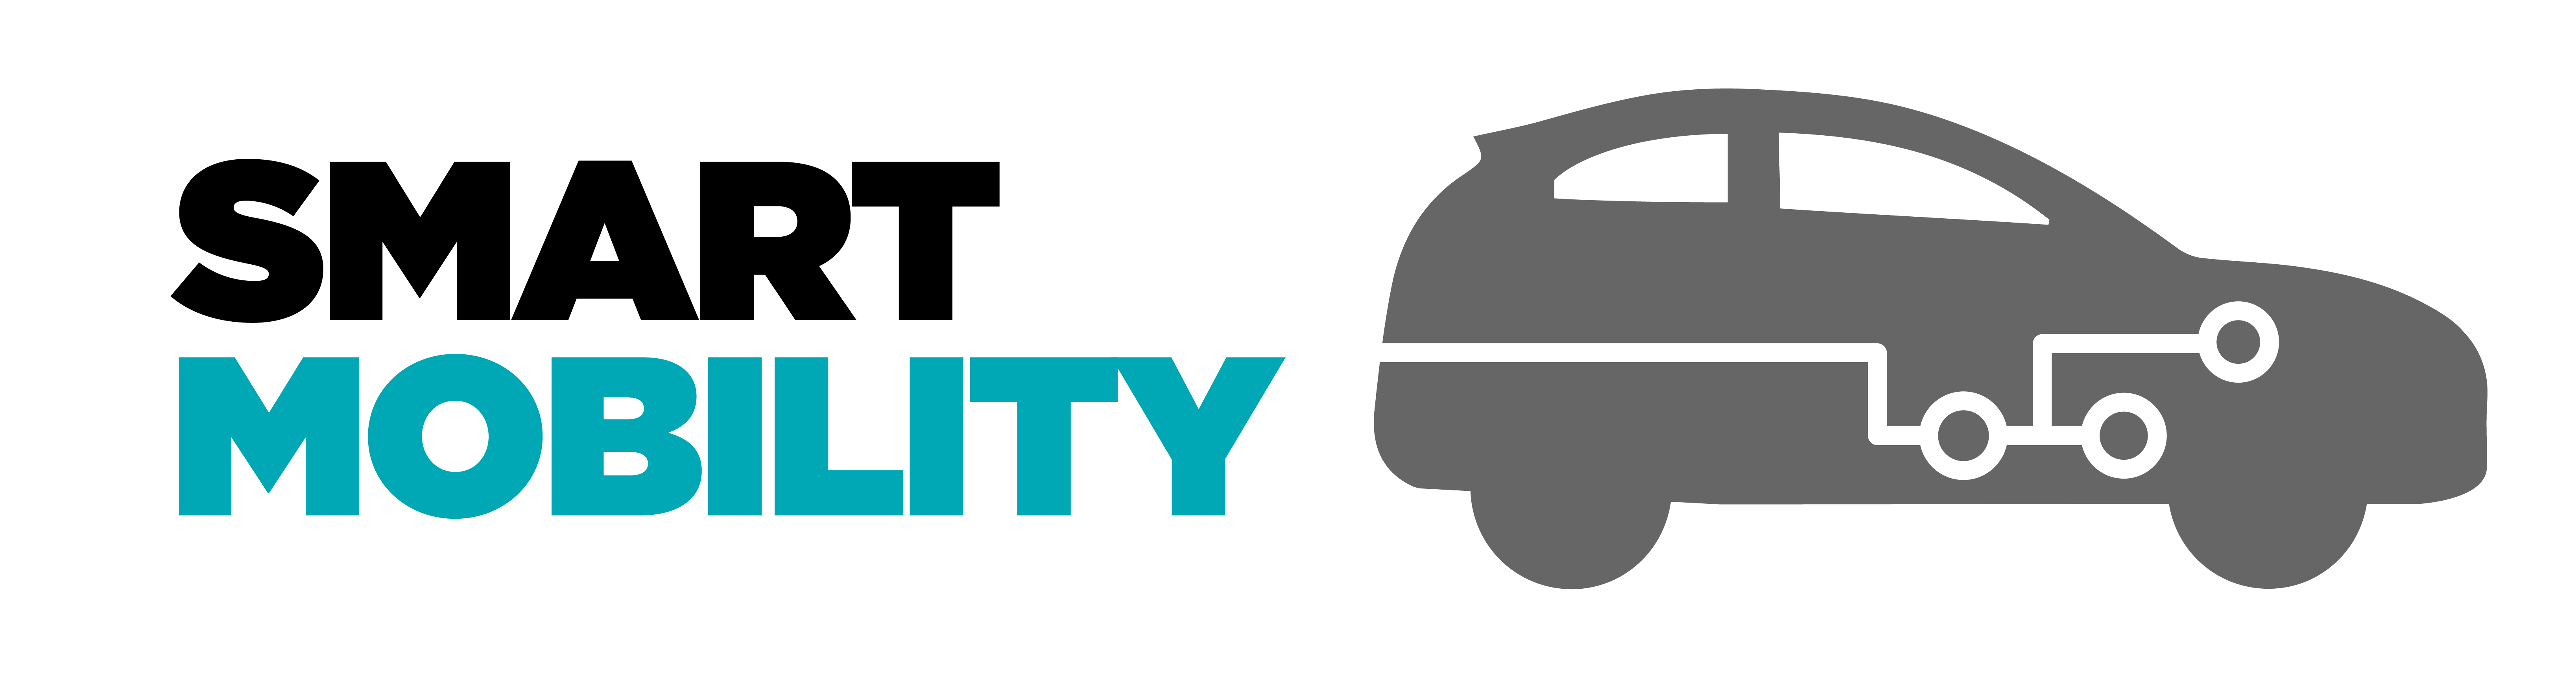 Smart Mobility new logo